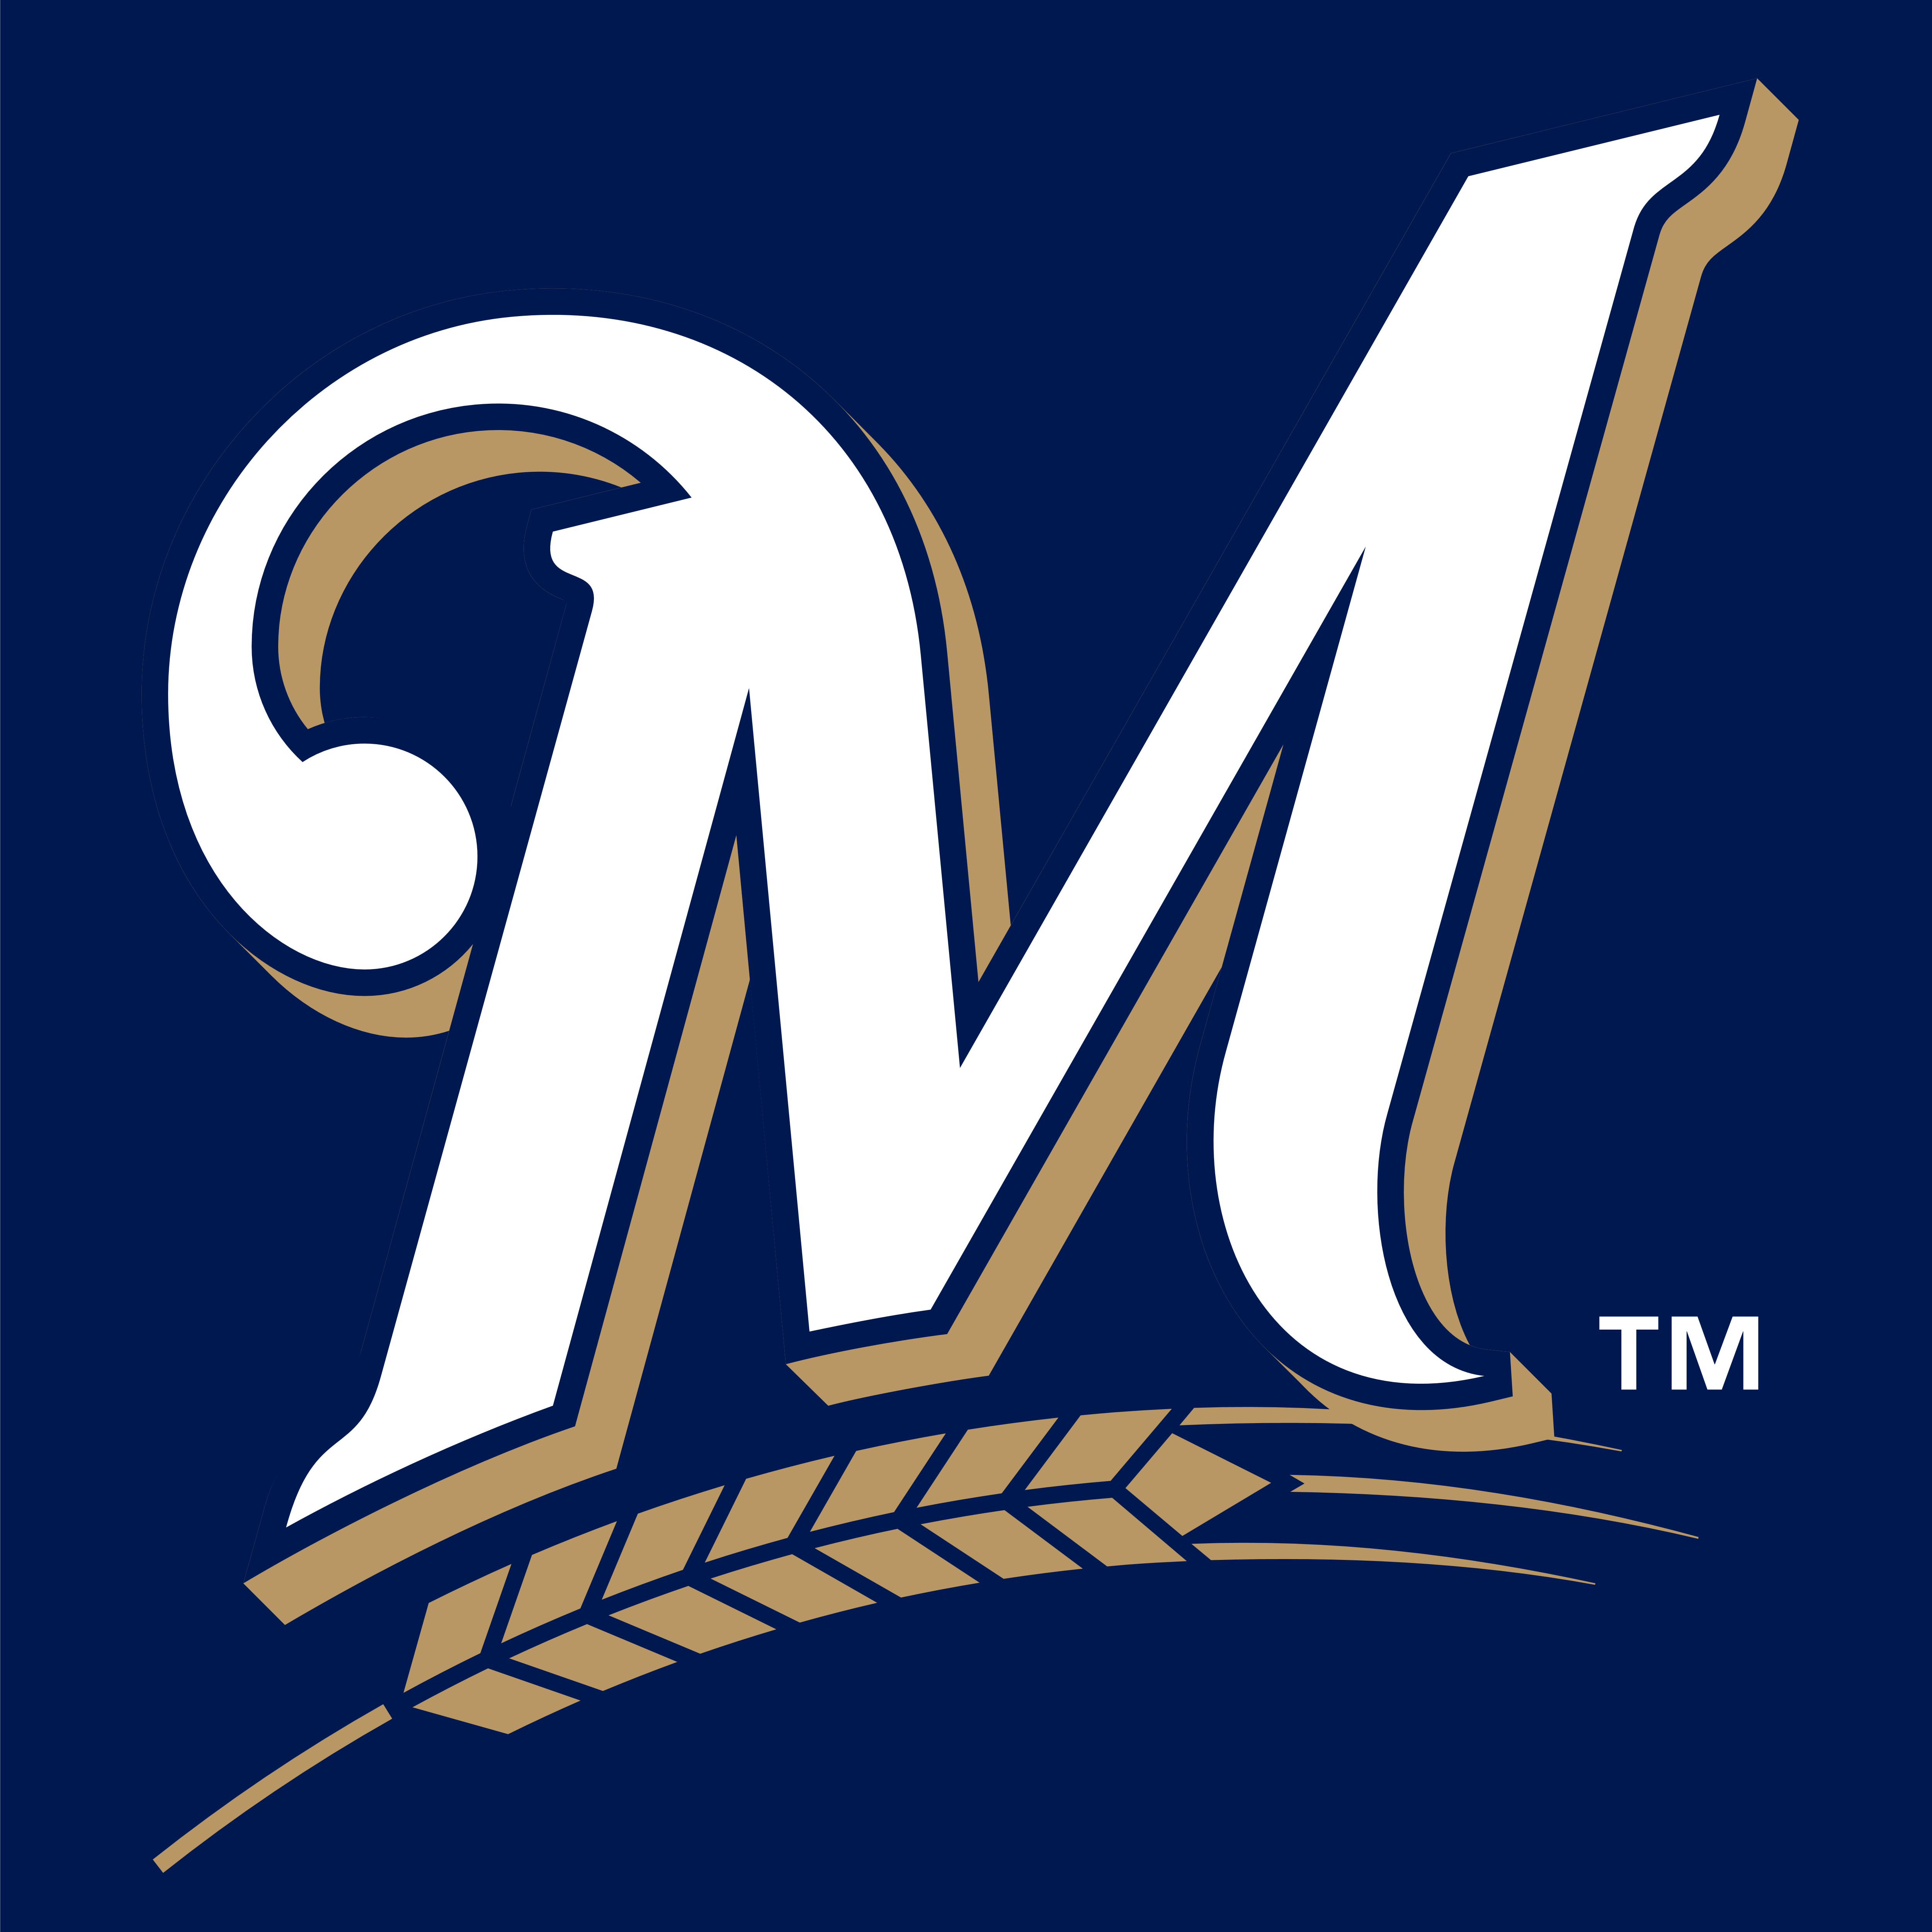 Milwaukee Brewers logo transp